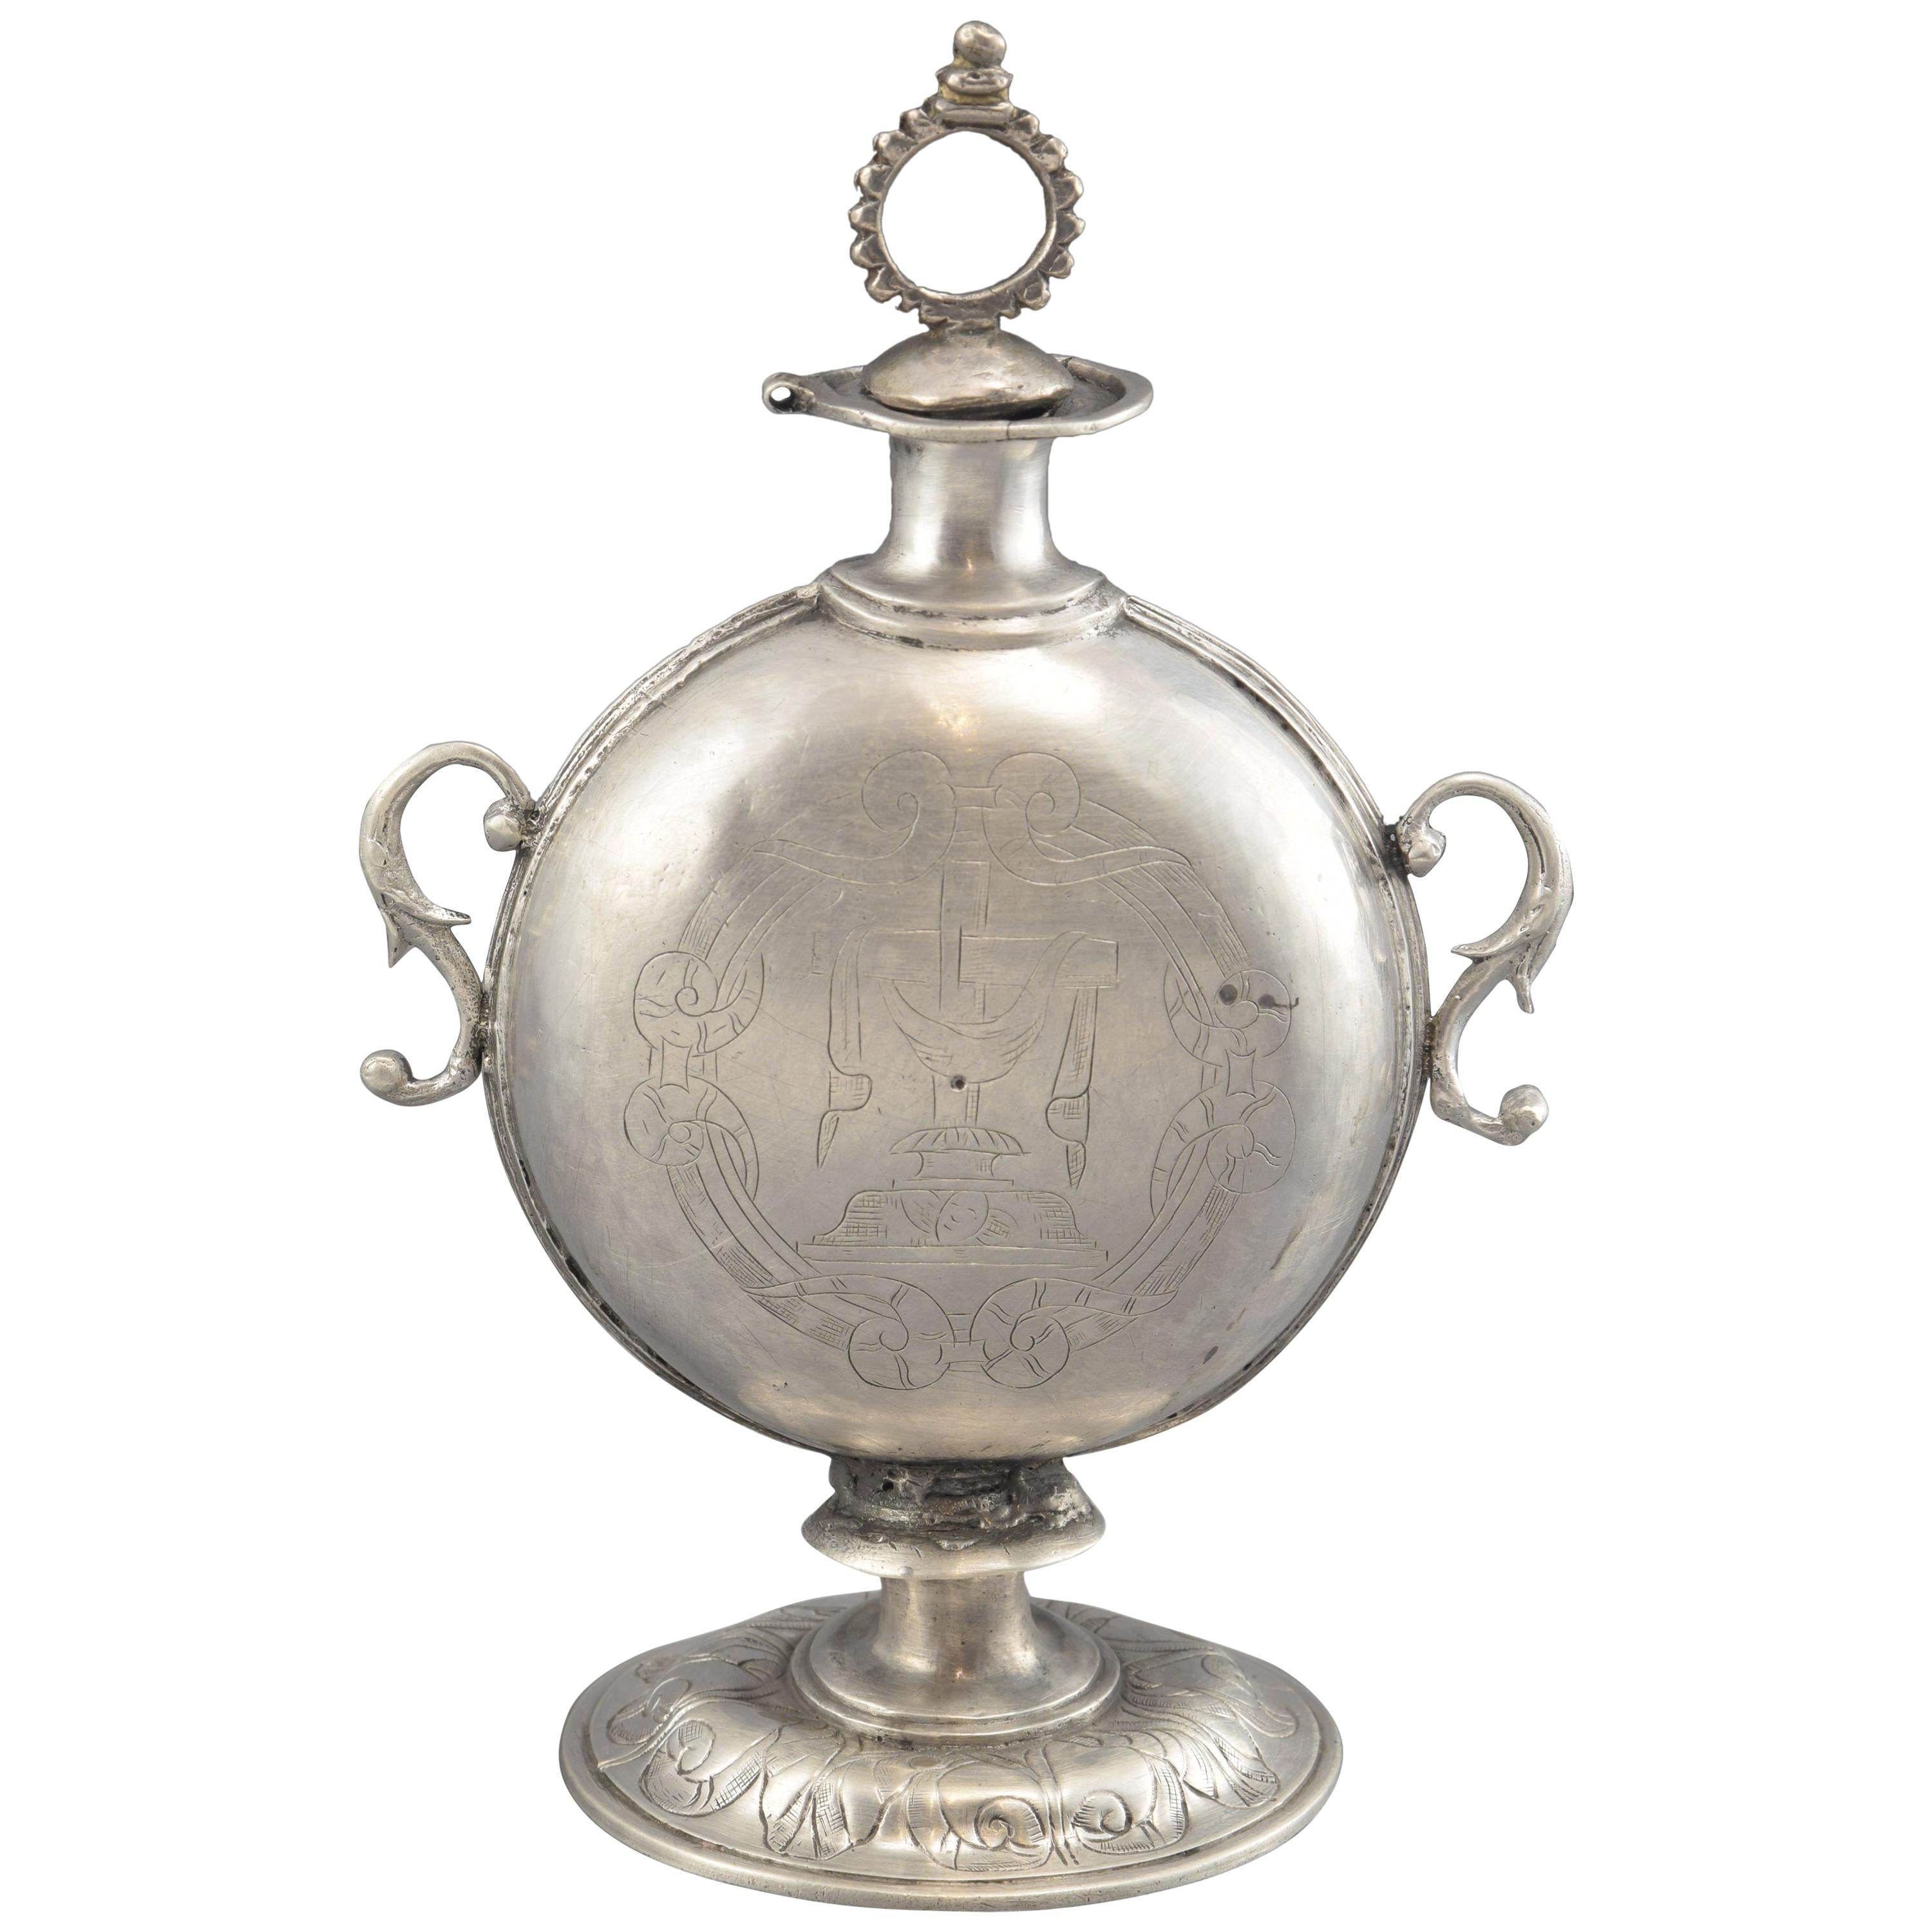 Silver Chrism Vessel or Chrismarium, No Original Lid, 16th Century